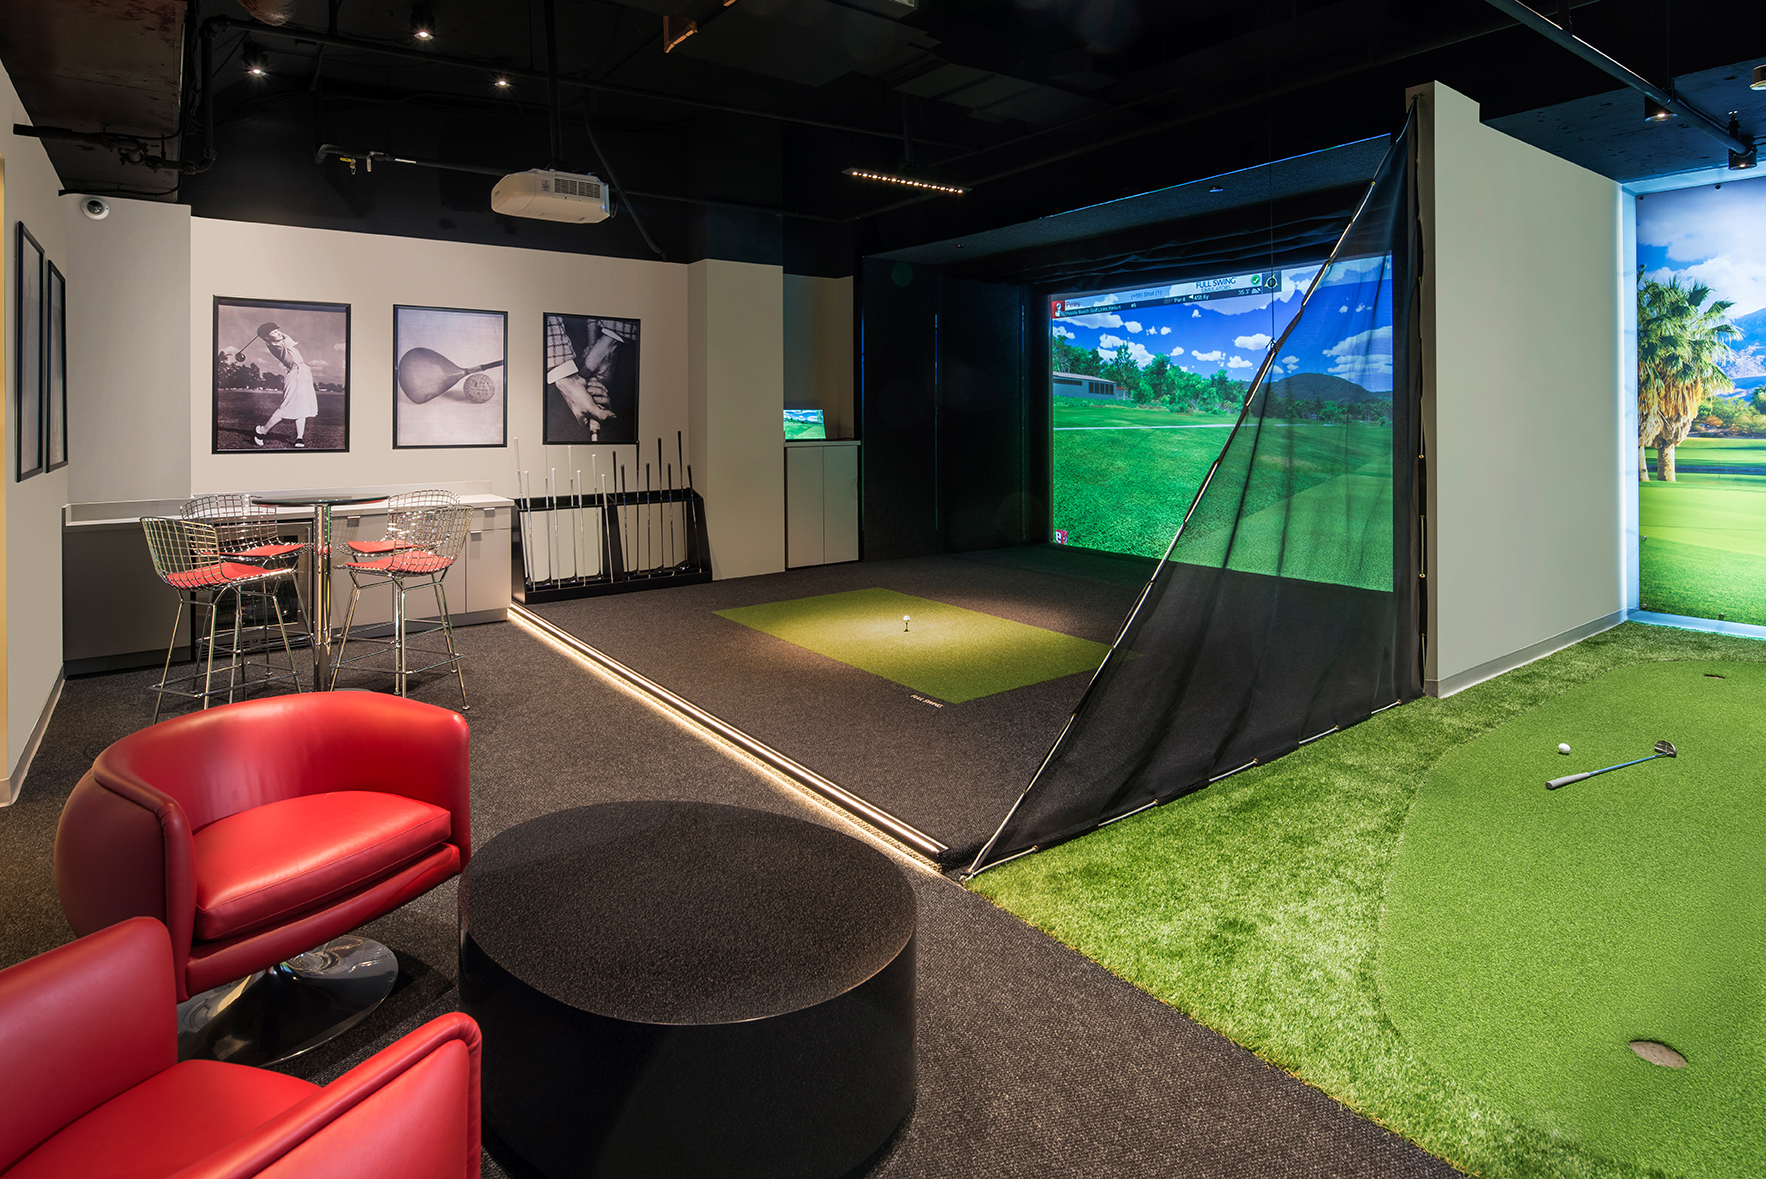 A golf simulator